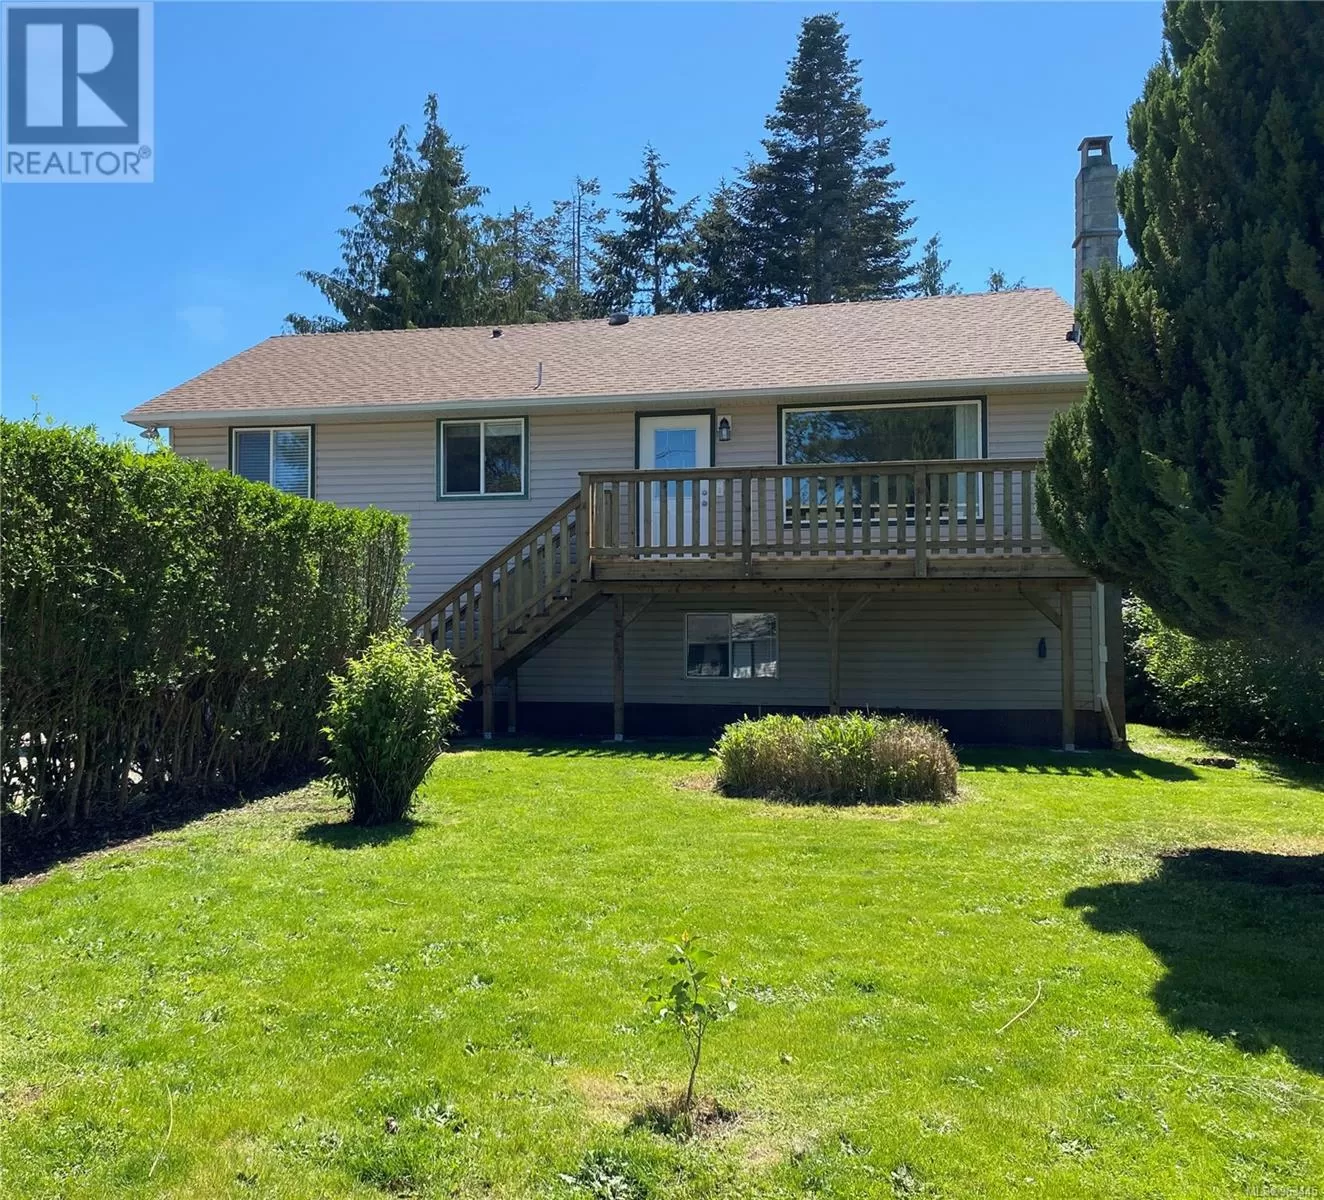 House for rent: 412 Oak Ave, Parksville, British Columbia V9P 1V9